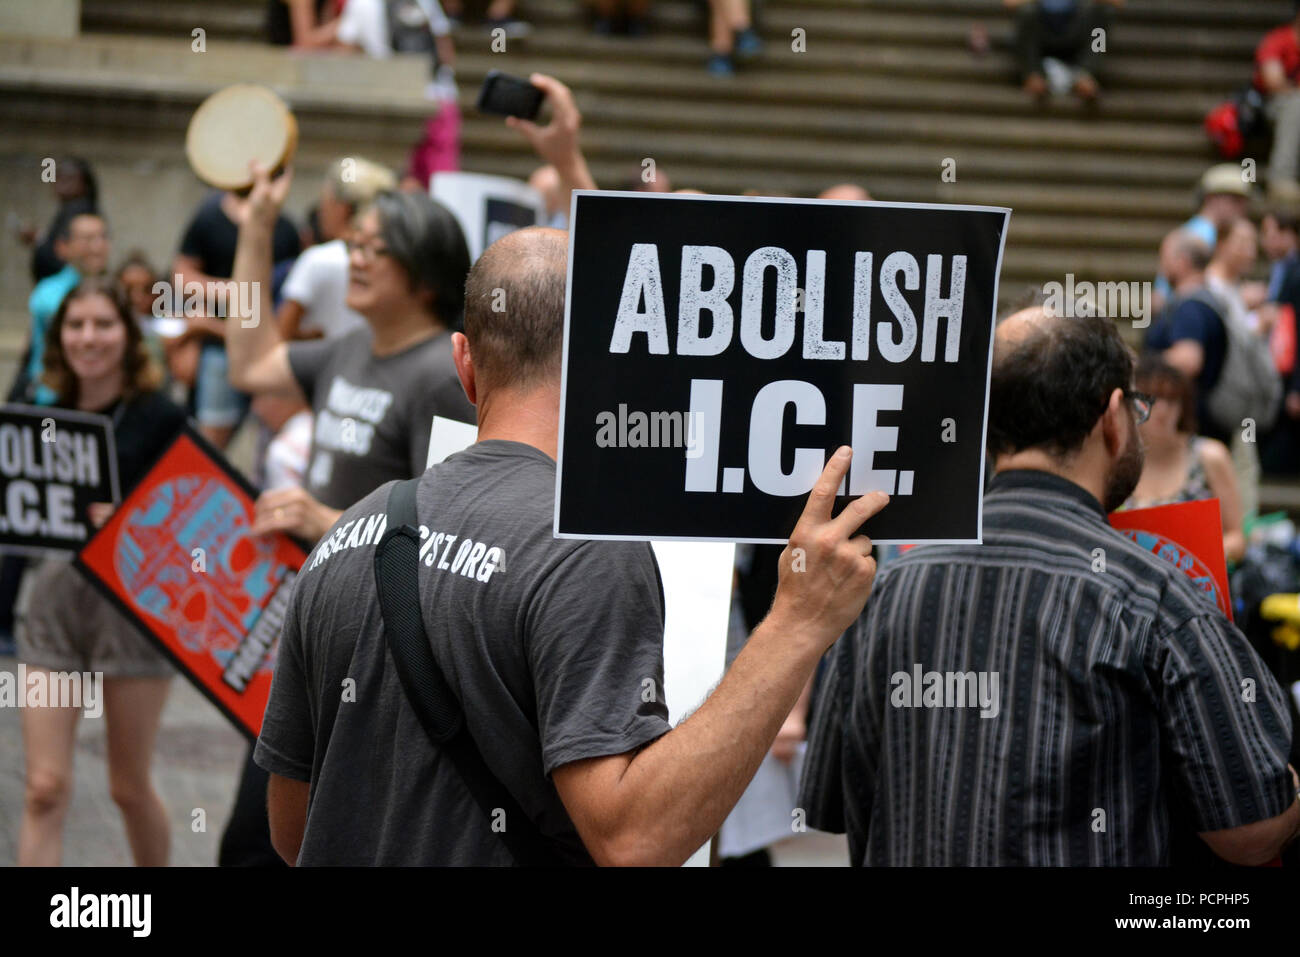 'Abolish ICE' rally on Wall Street in Lower Manhattan. Stock Photo